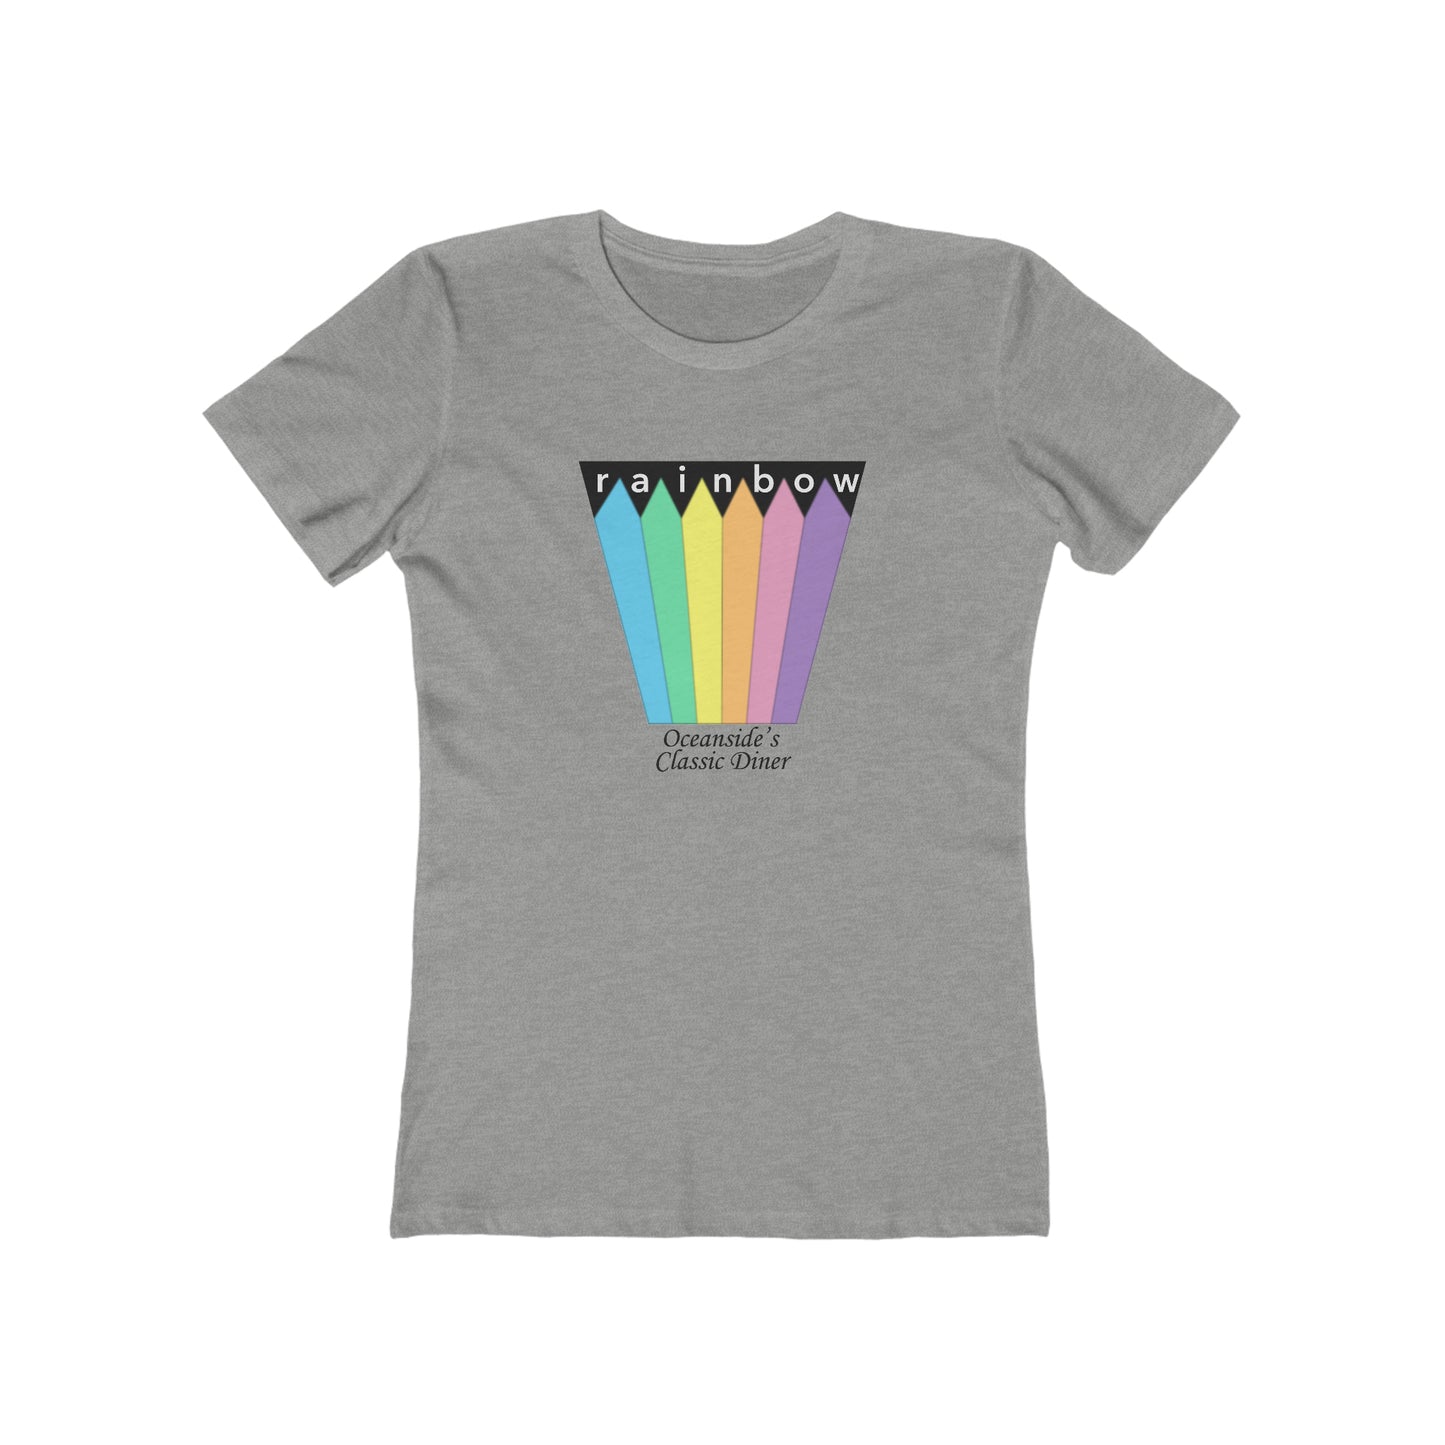 Rainbow Diner - Women's T-Shirt